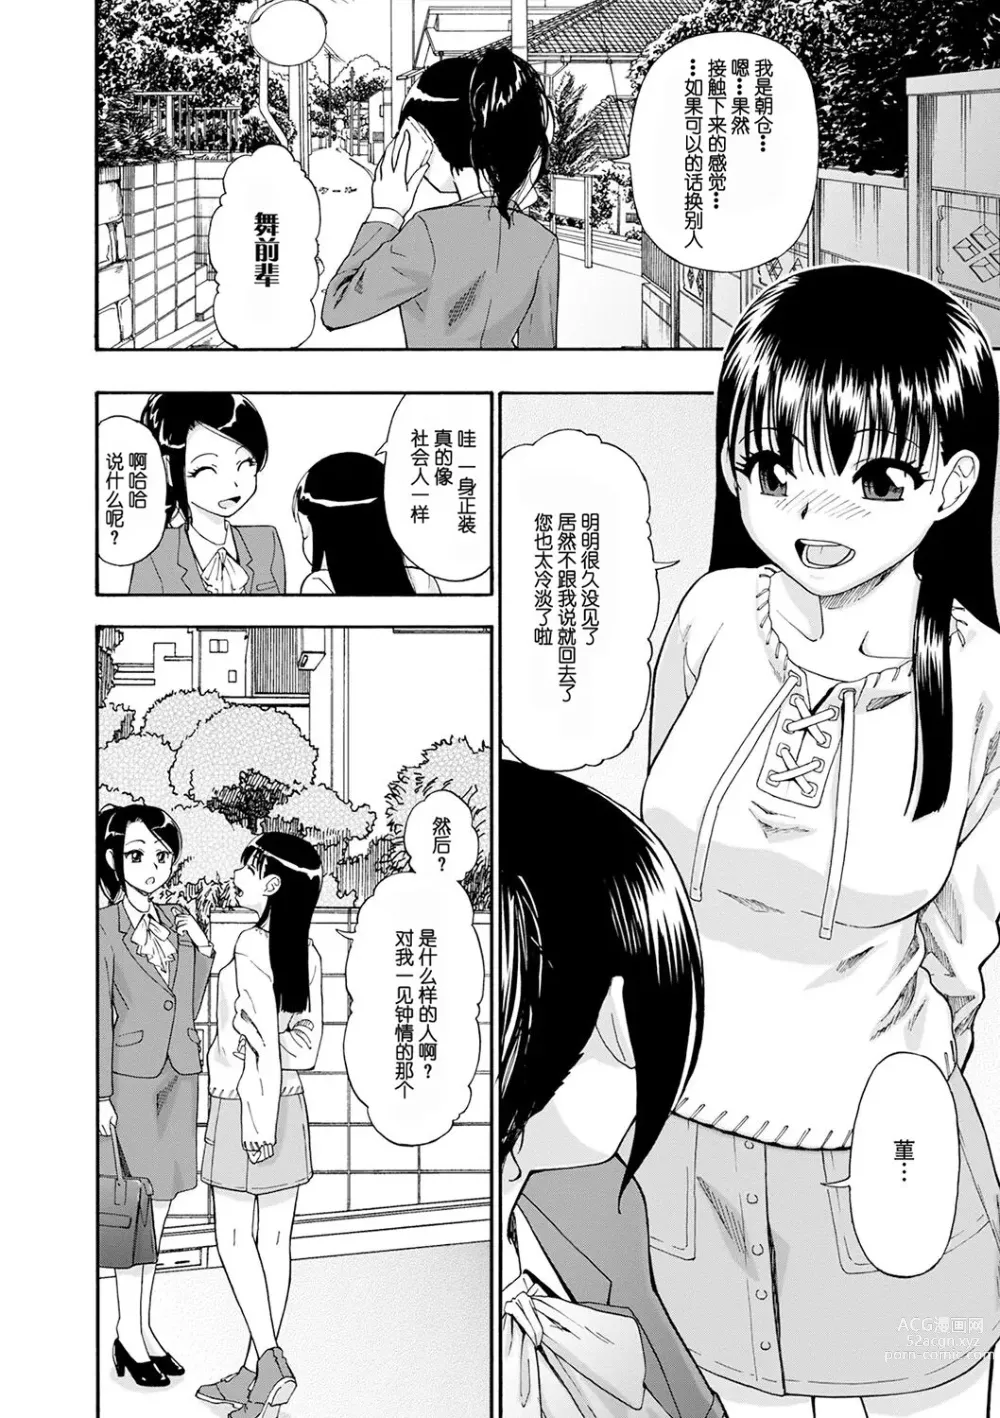 Page 8 of manga Chikushou Bara - The Chikushou Bara